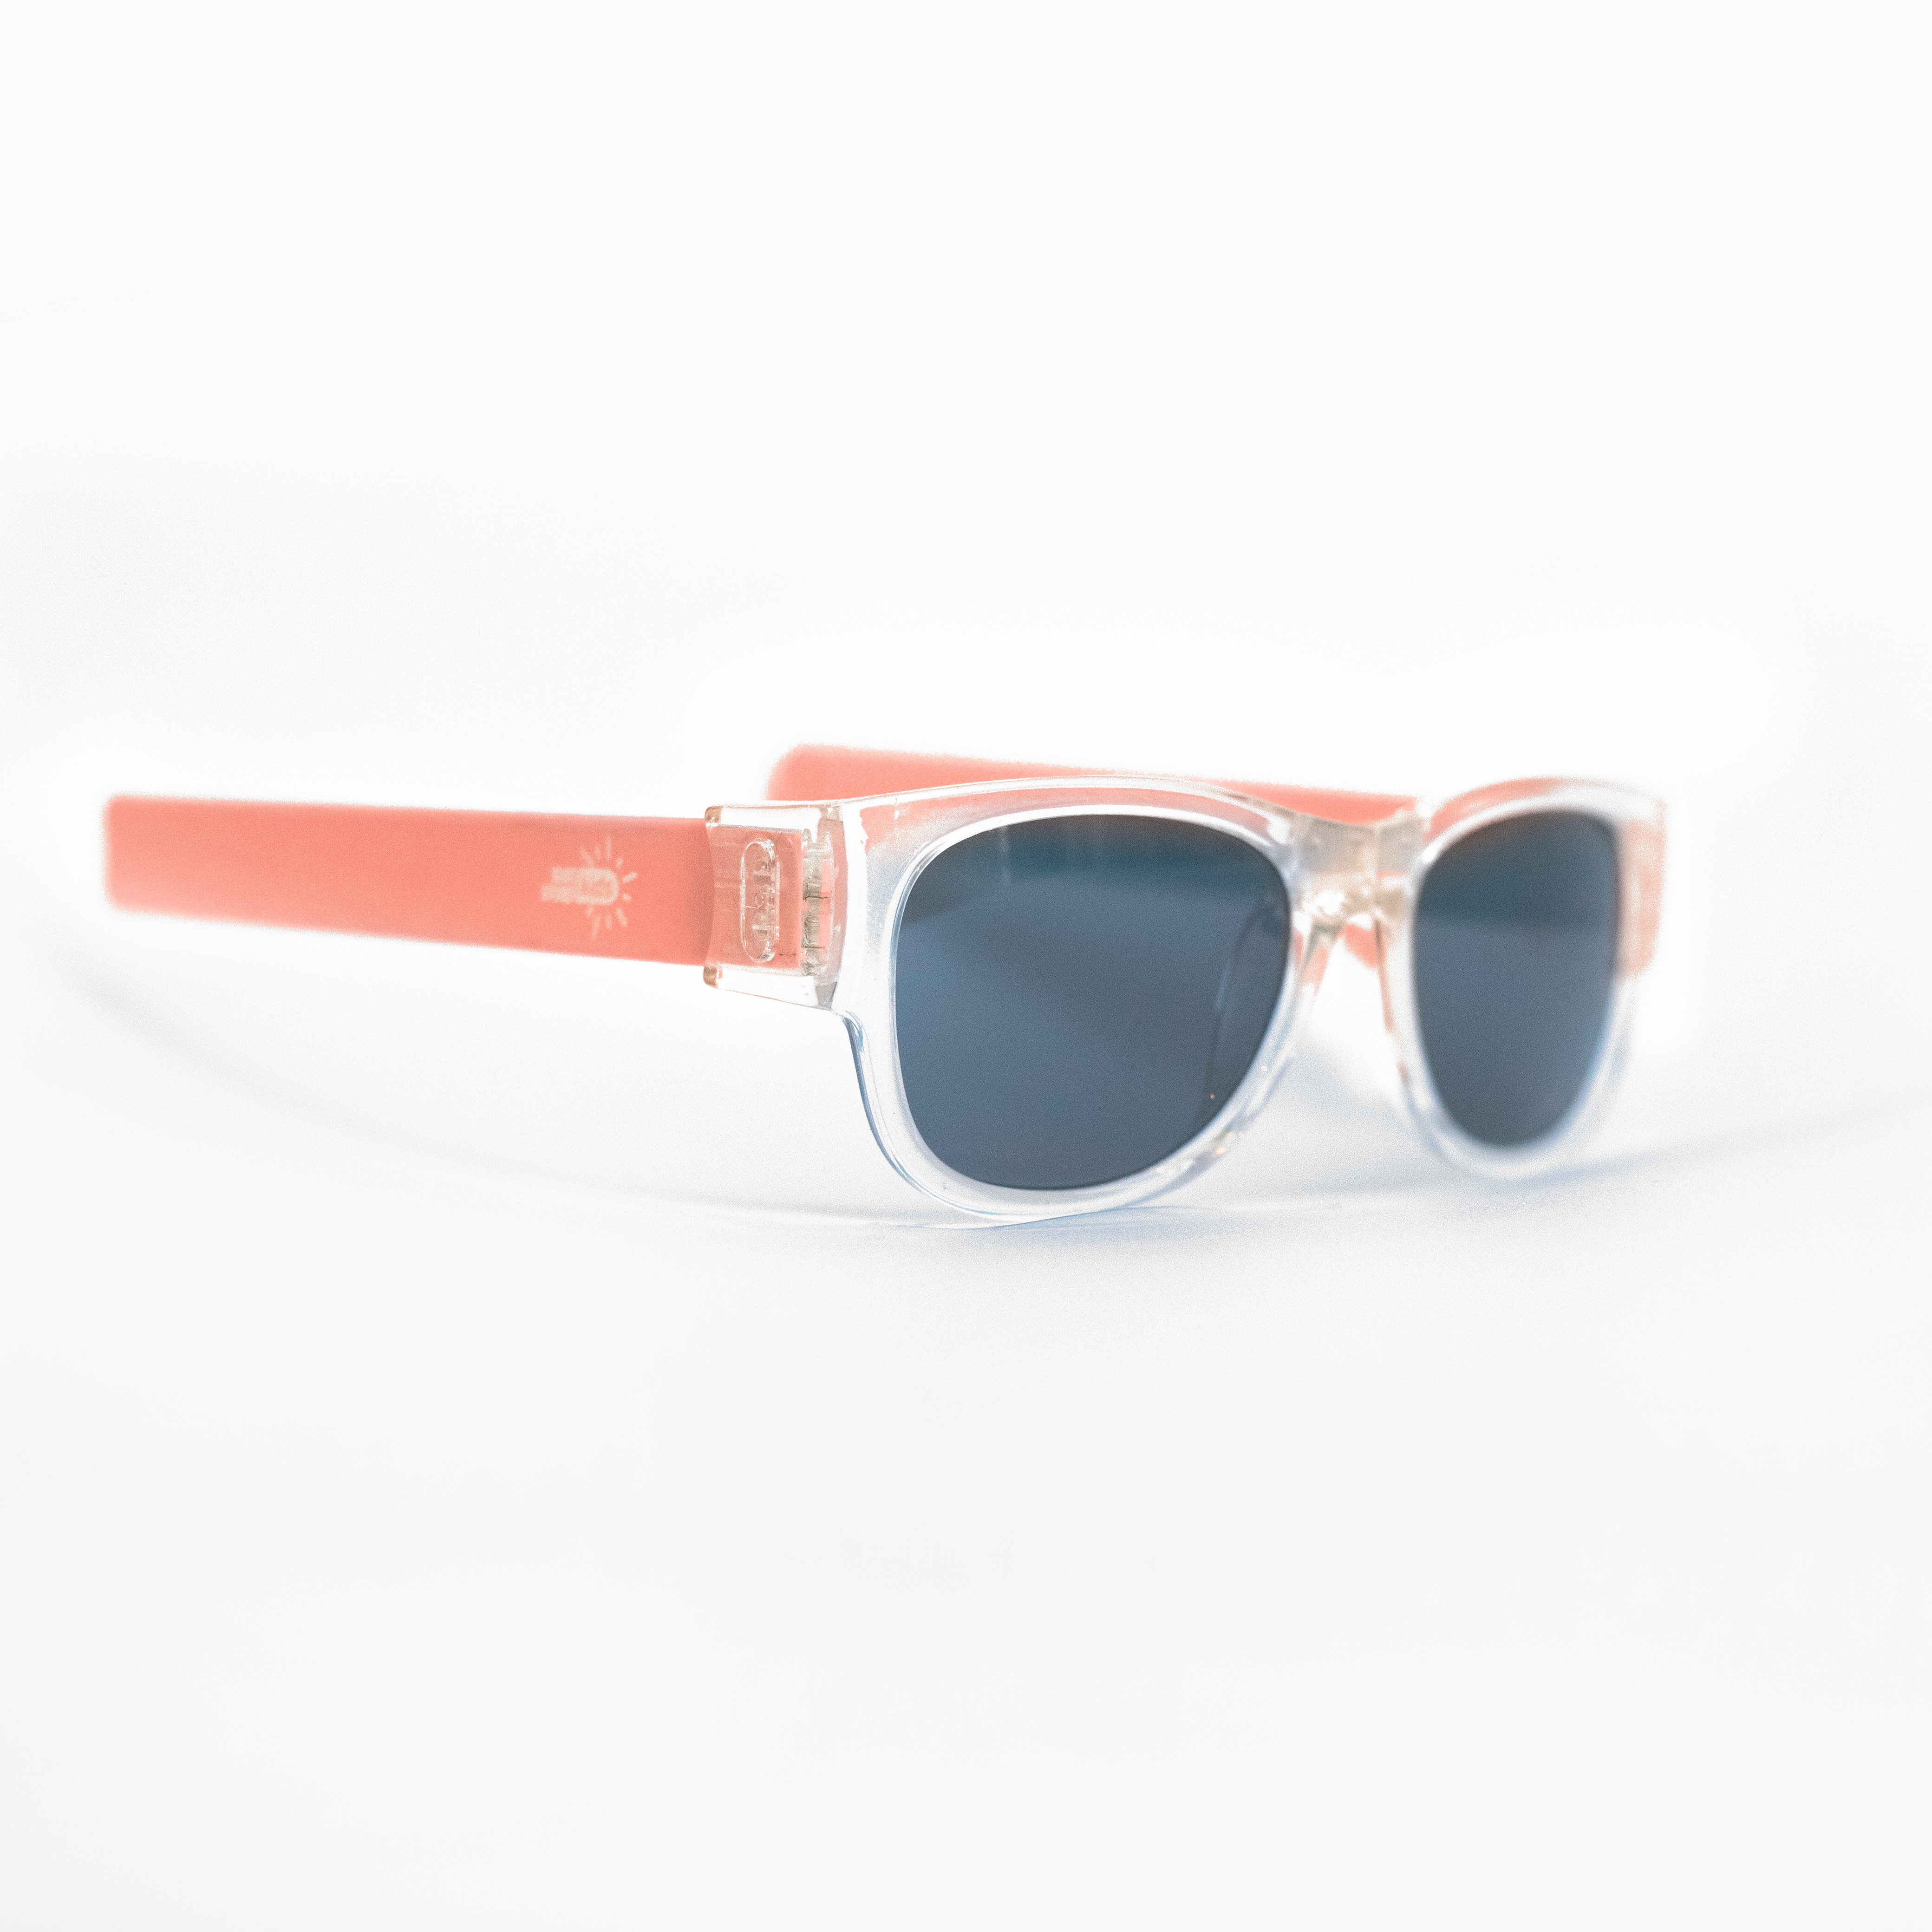 Peach Snappable Sunglasses: Original